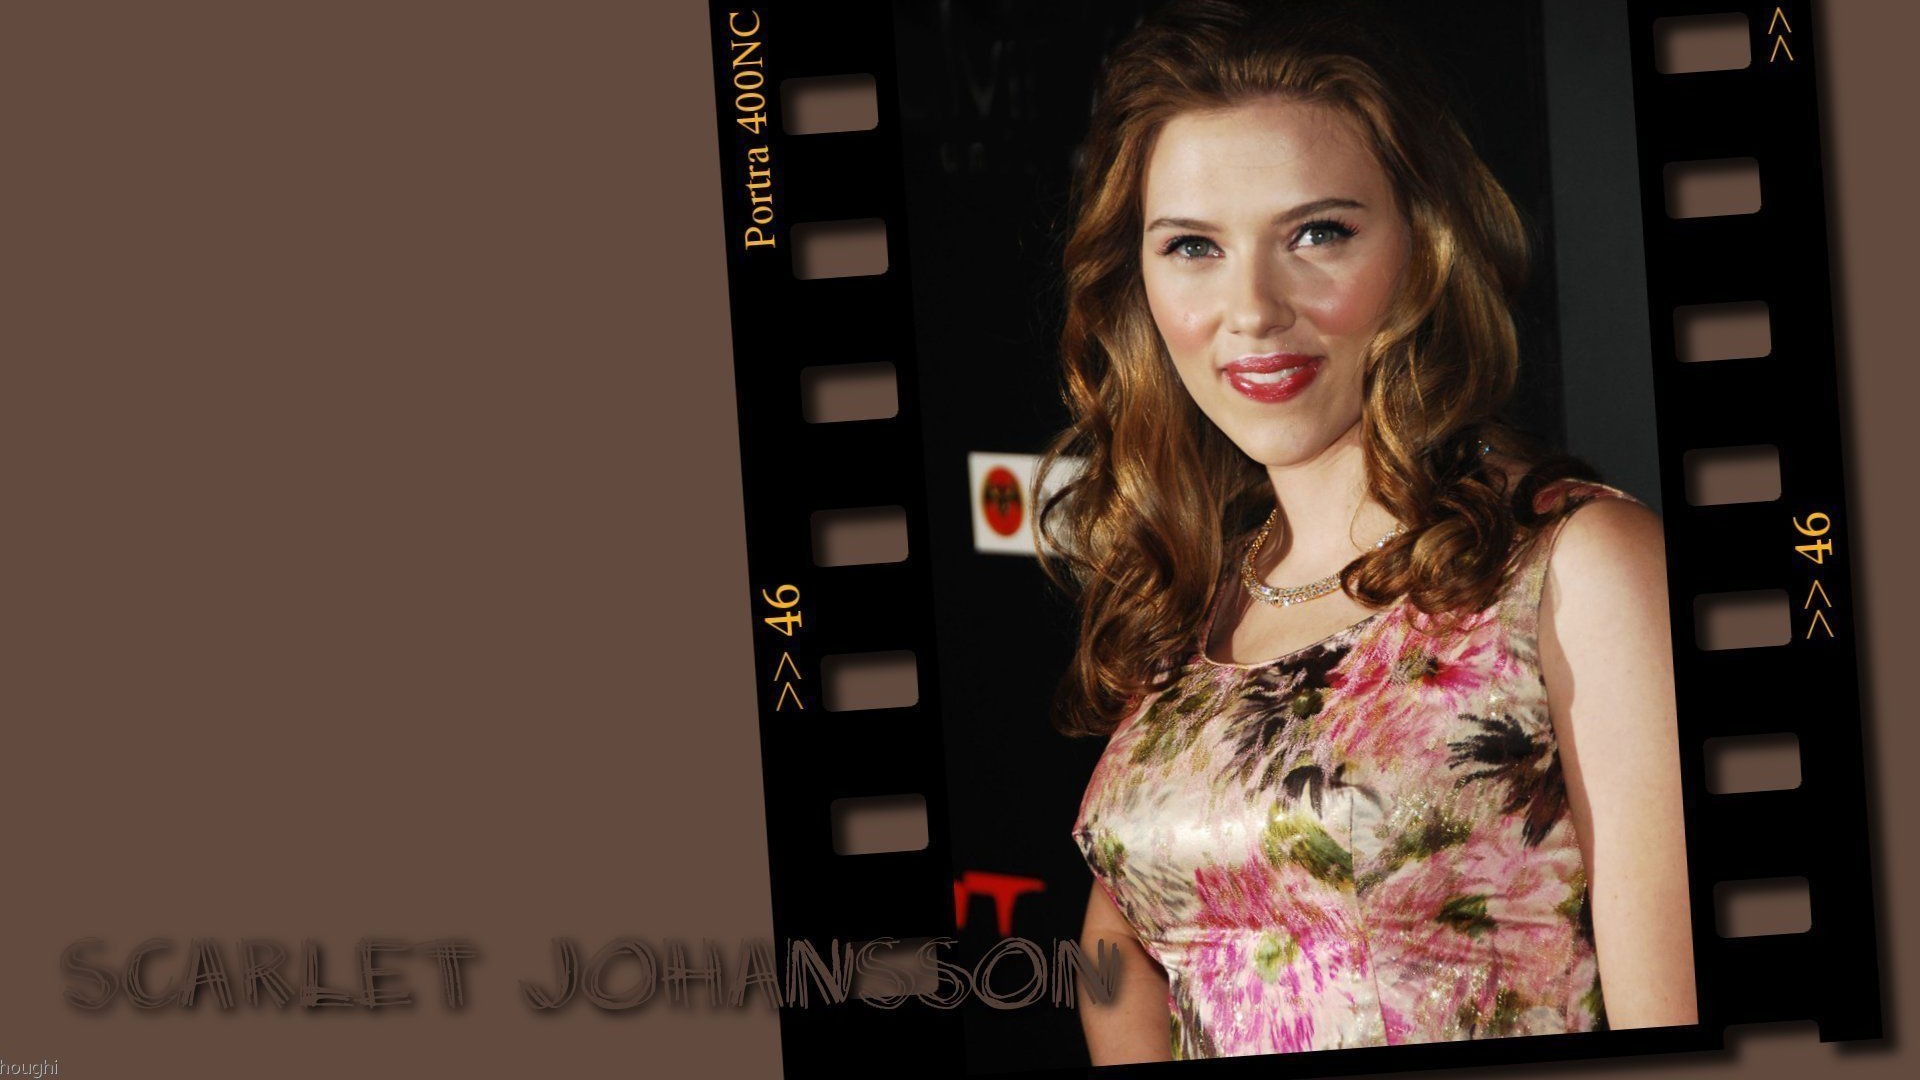 Scarlett Johansson beautiful wallpaper #2 - 1920x1080